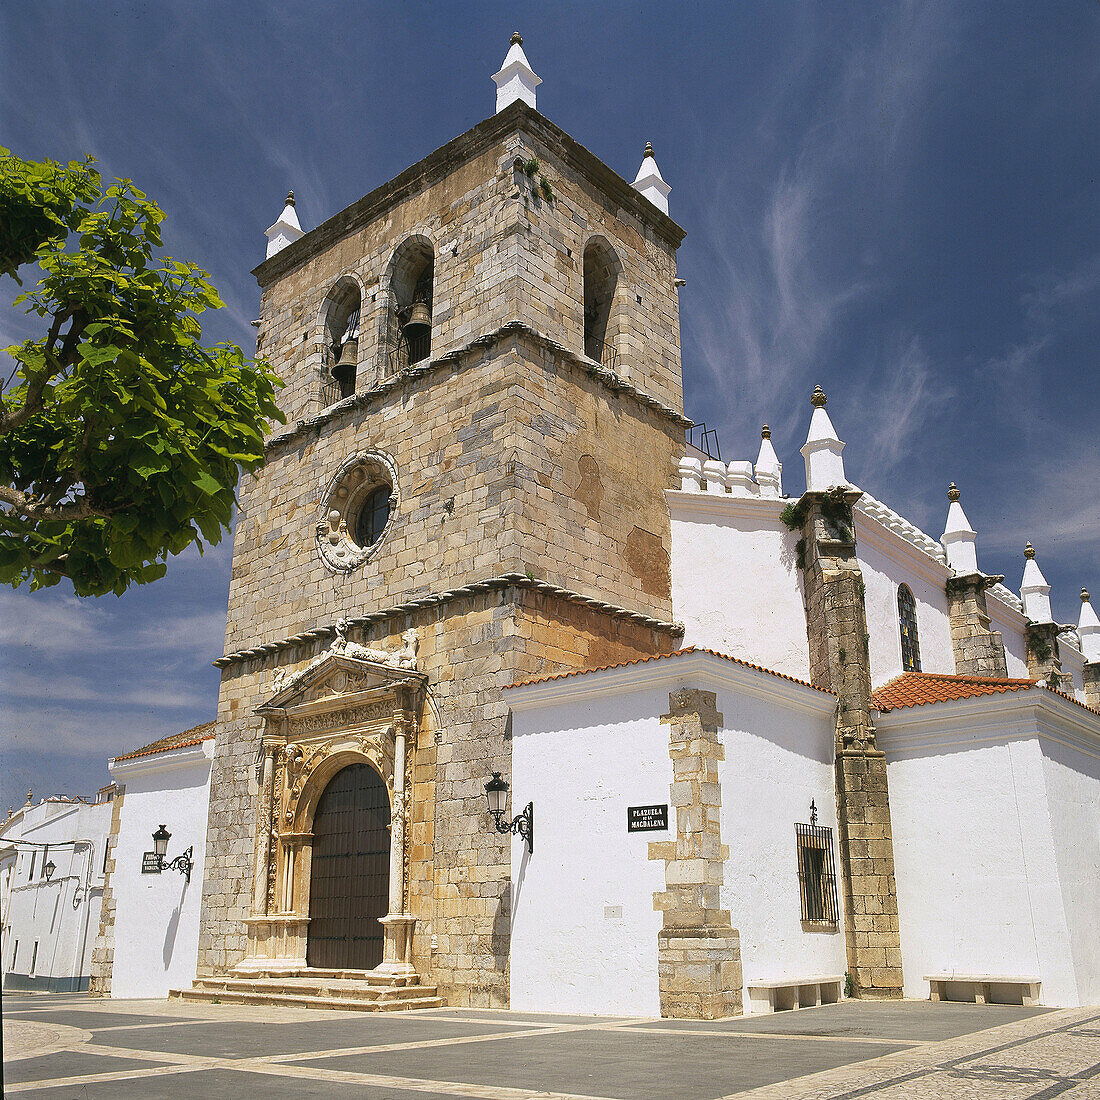 Sigüenza. Guadalajara province, Spain